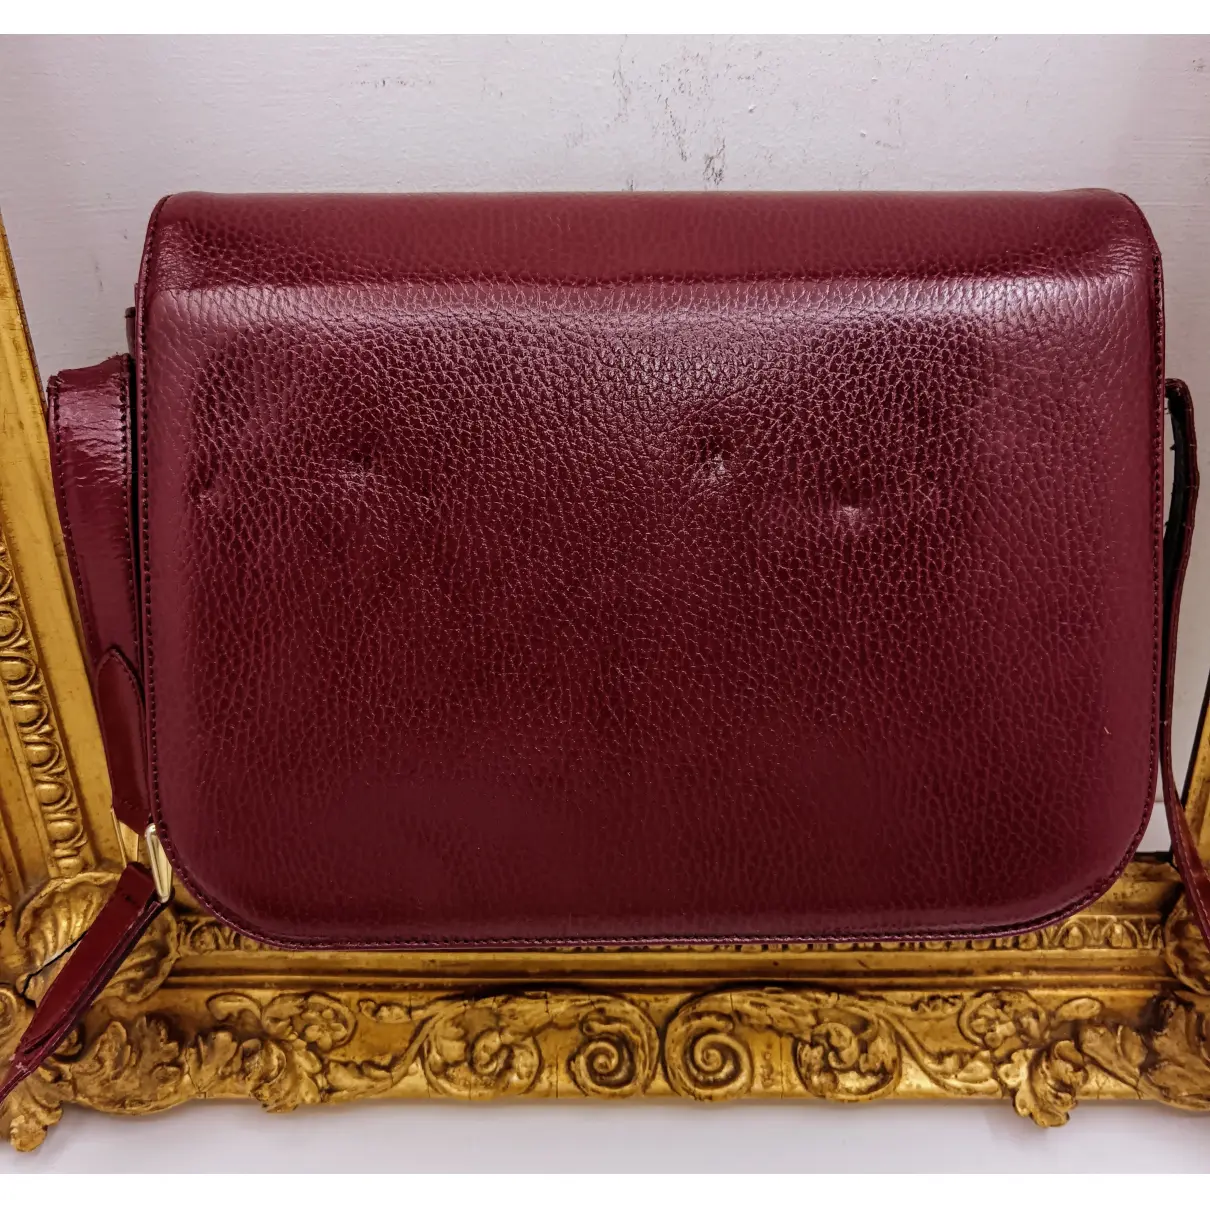 Buy Cartier Leather crossbody bag online - Vintage